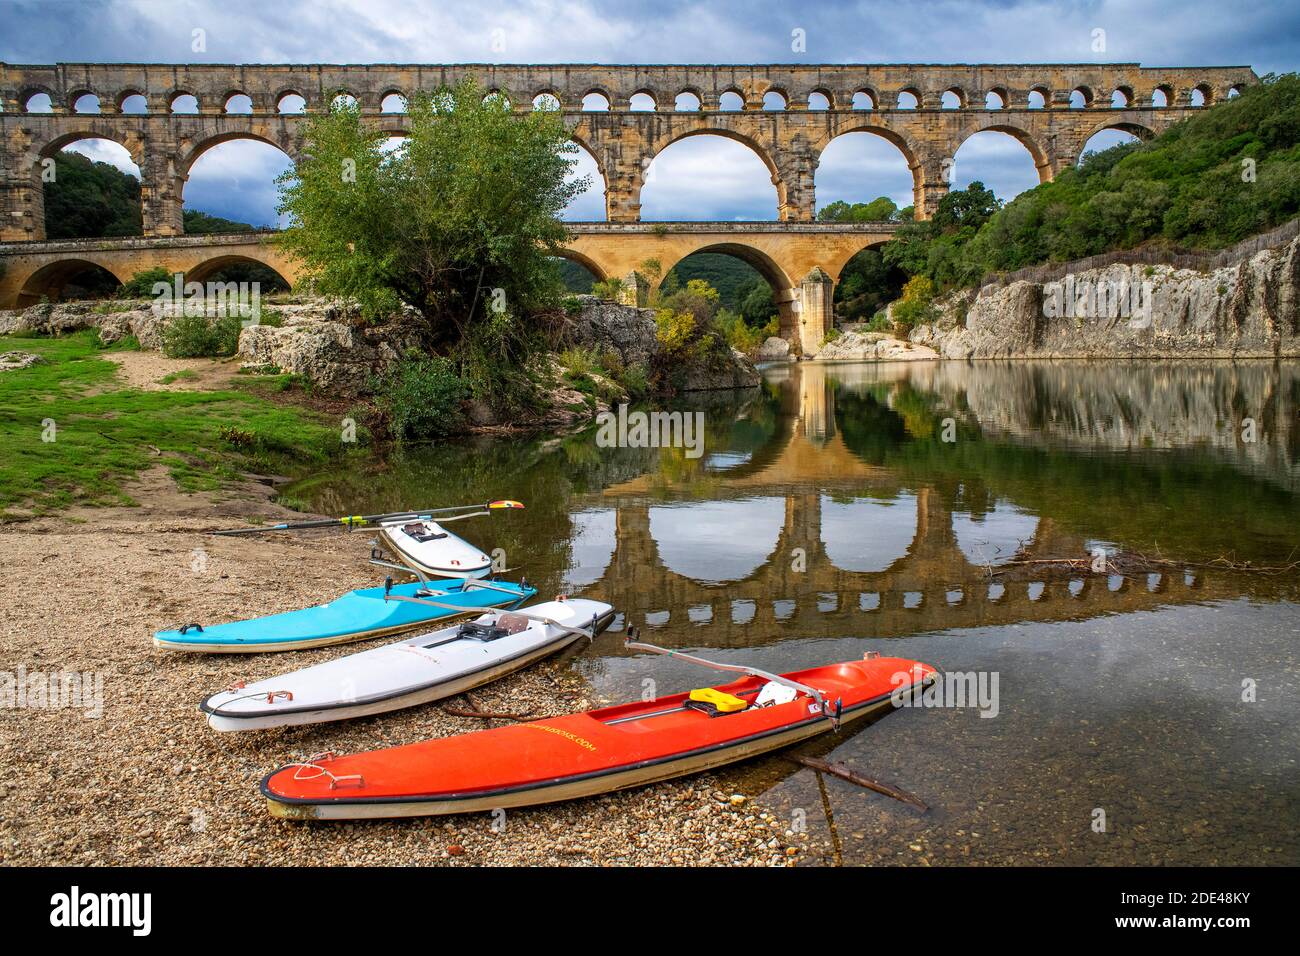 Kajaks in Pont du Gard, Languedoc Roussillon Region, Frankreich, UNESCO-Weltkulturerbe. Das römische Aquädukt überquert den Fluss Gardon bei Vers-Pon-du-gar Stockfoto